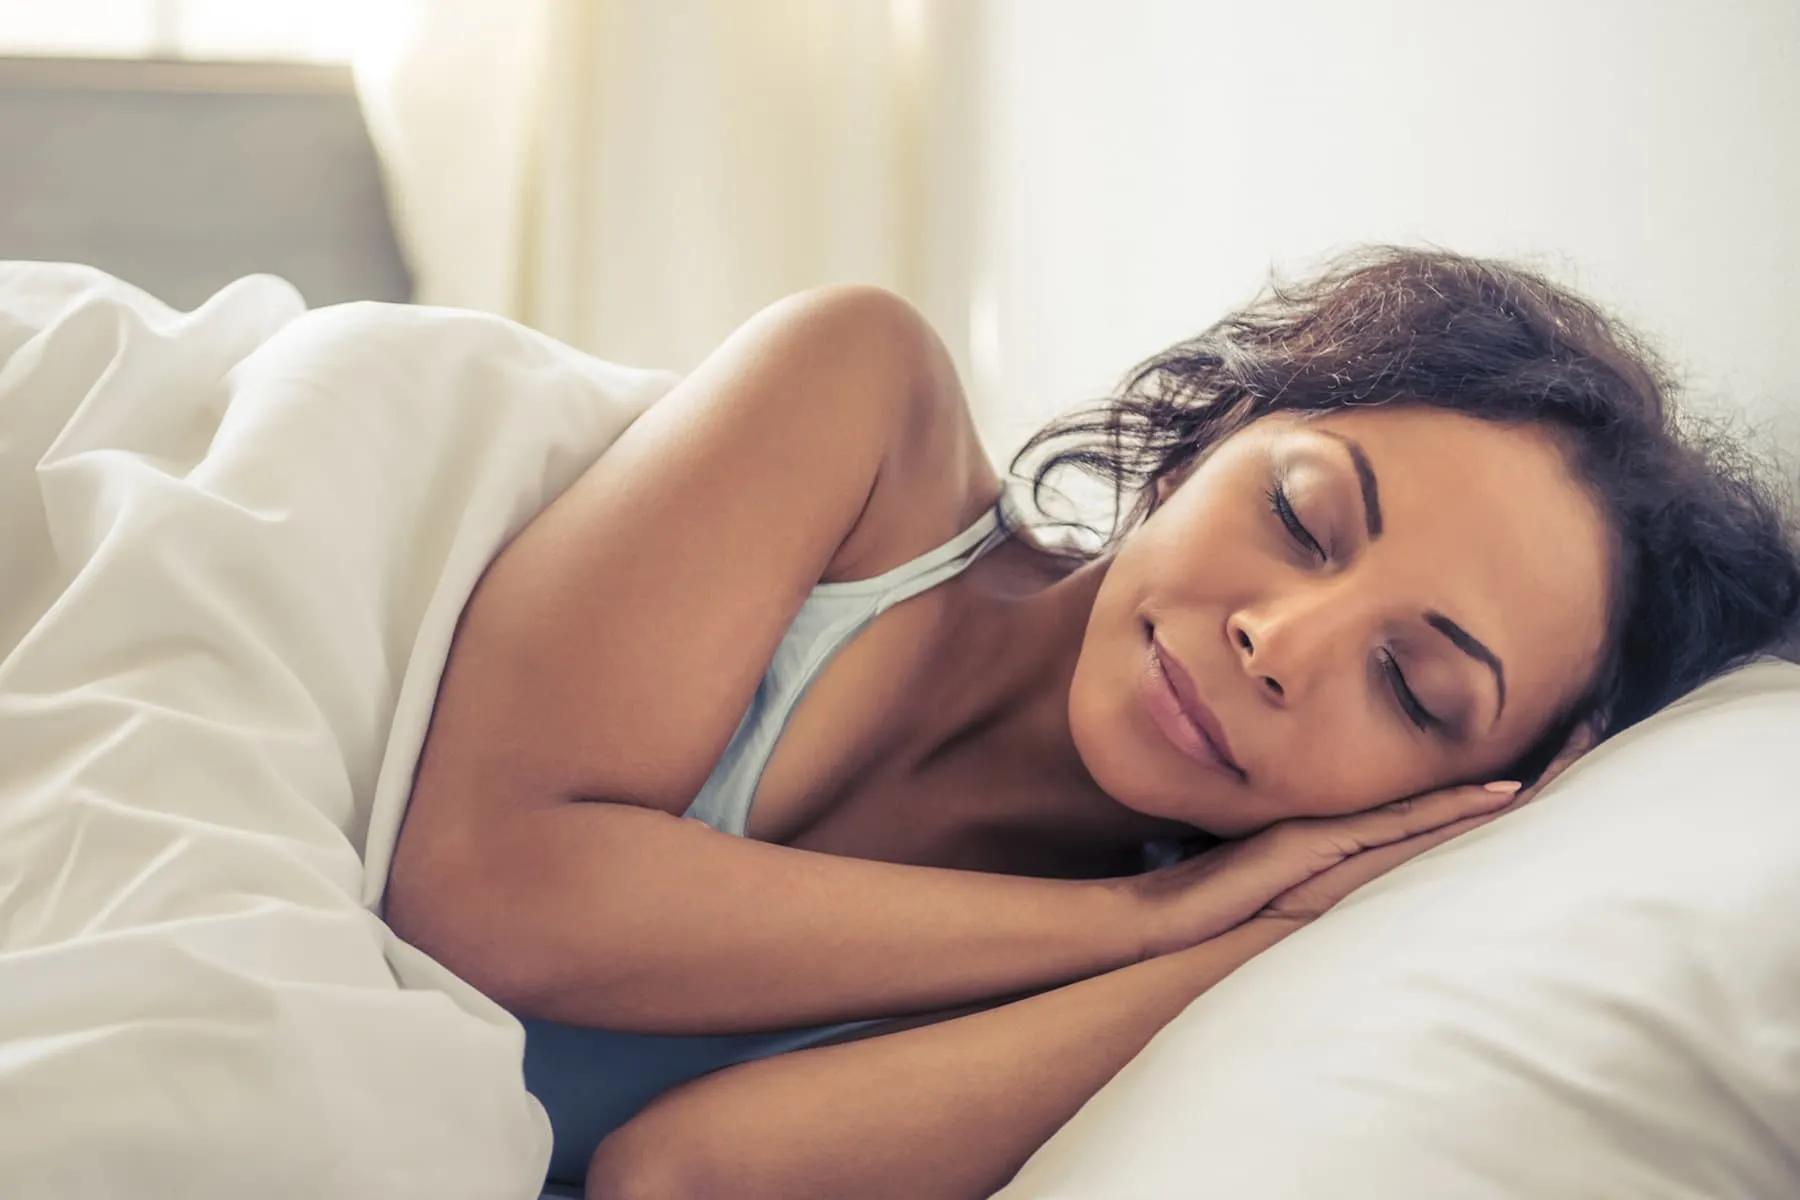 Weighted Blanket Coziness Promotes Sleep by Releasing Melatonin